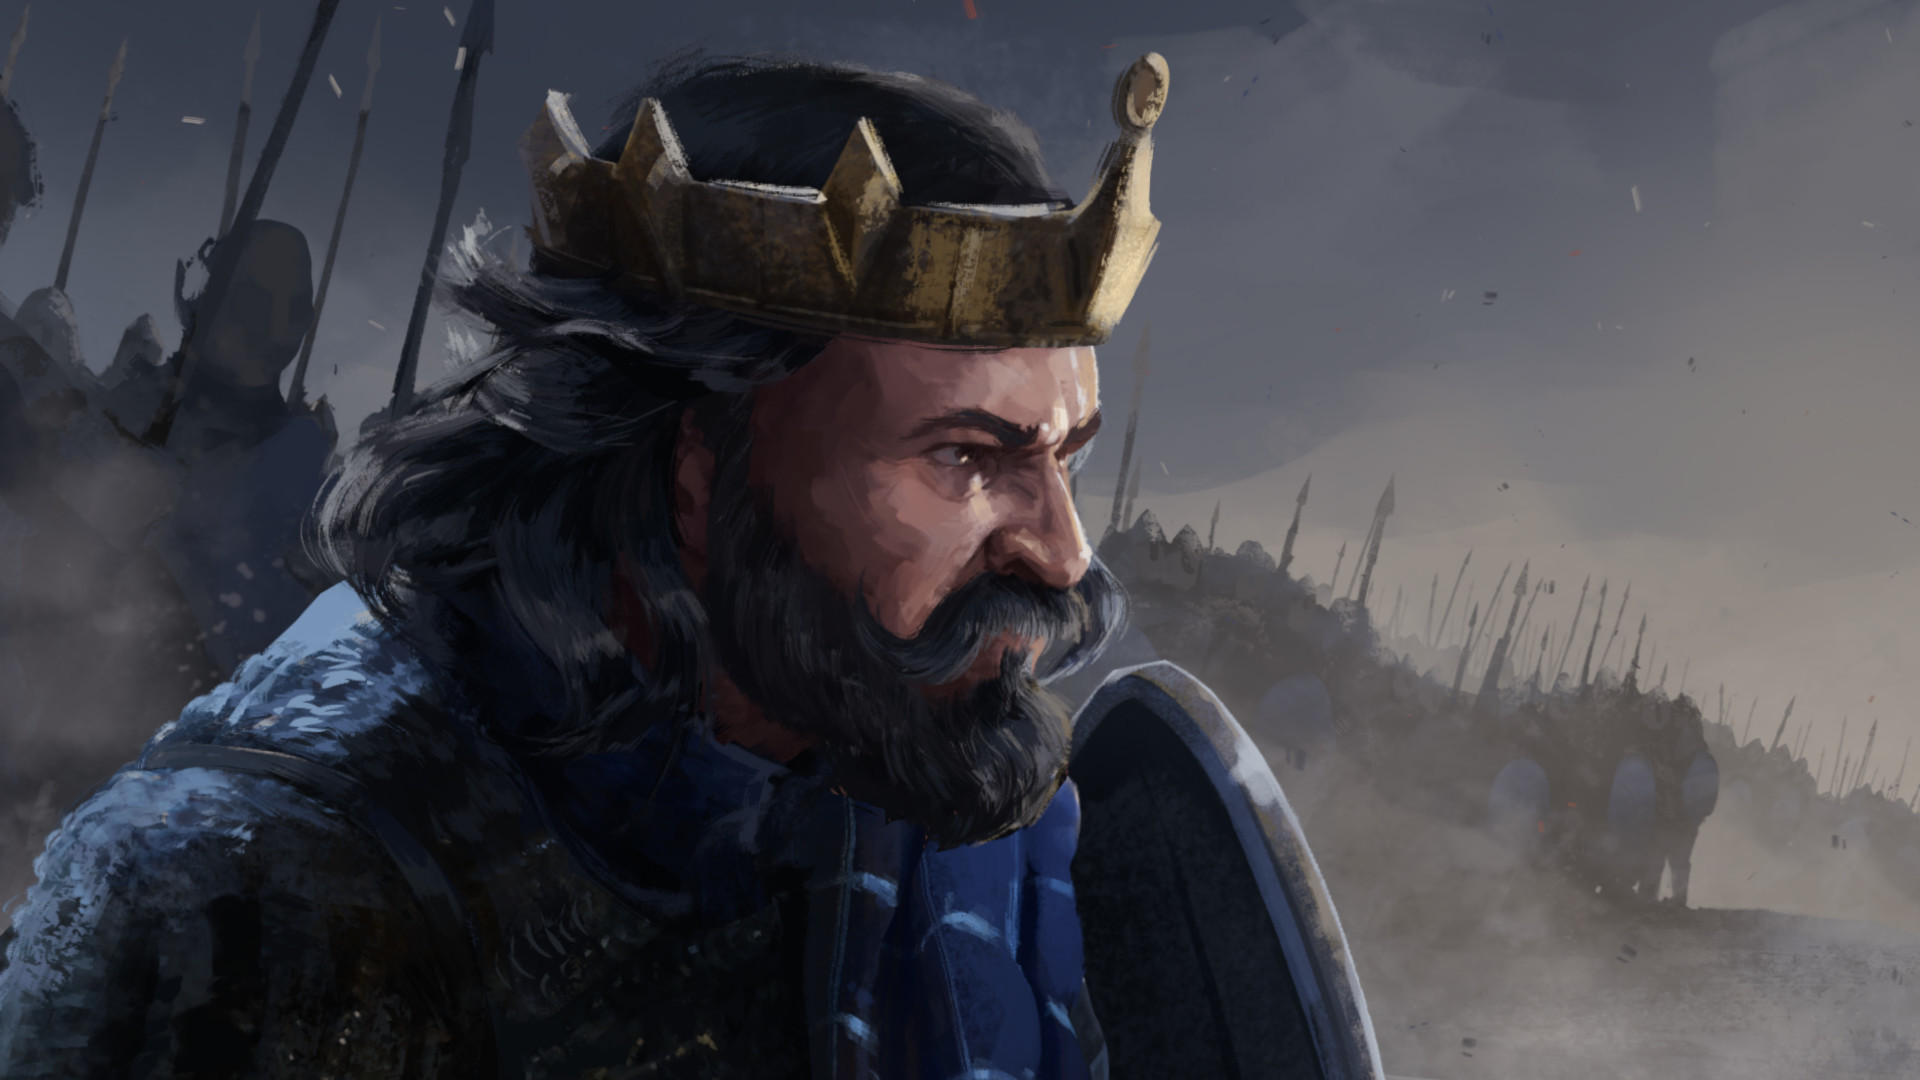 download free total war saga thrones of britannia voksi